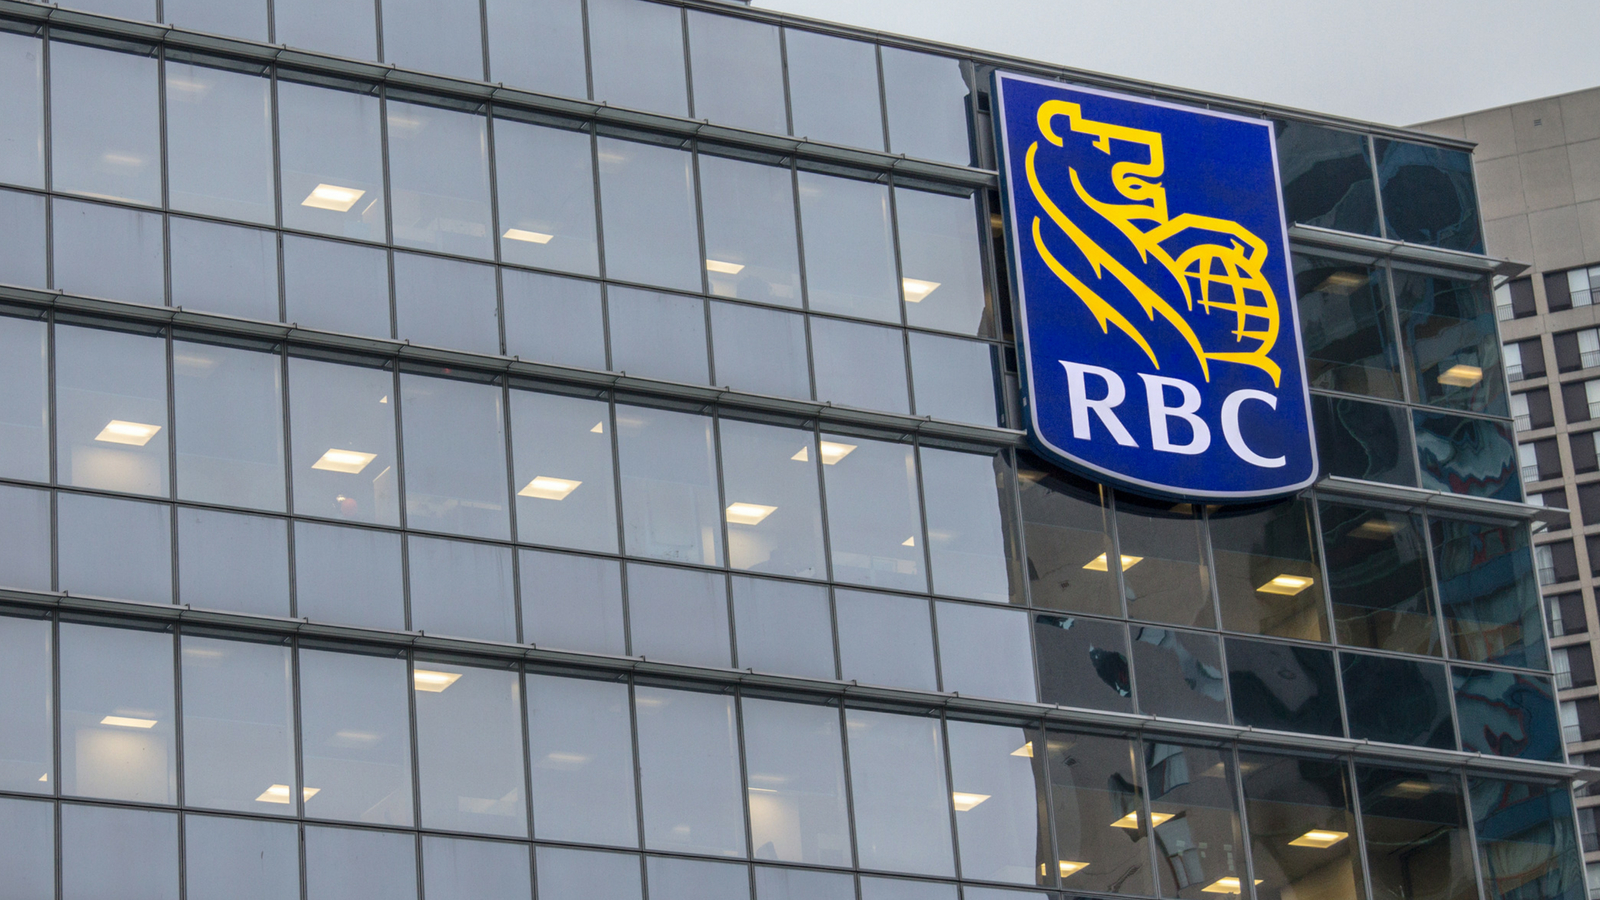 Headquarters of the RBC Bank (Royal Bank of Canada) in Toronto, Ontario. Photo via shutterstock.com